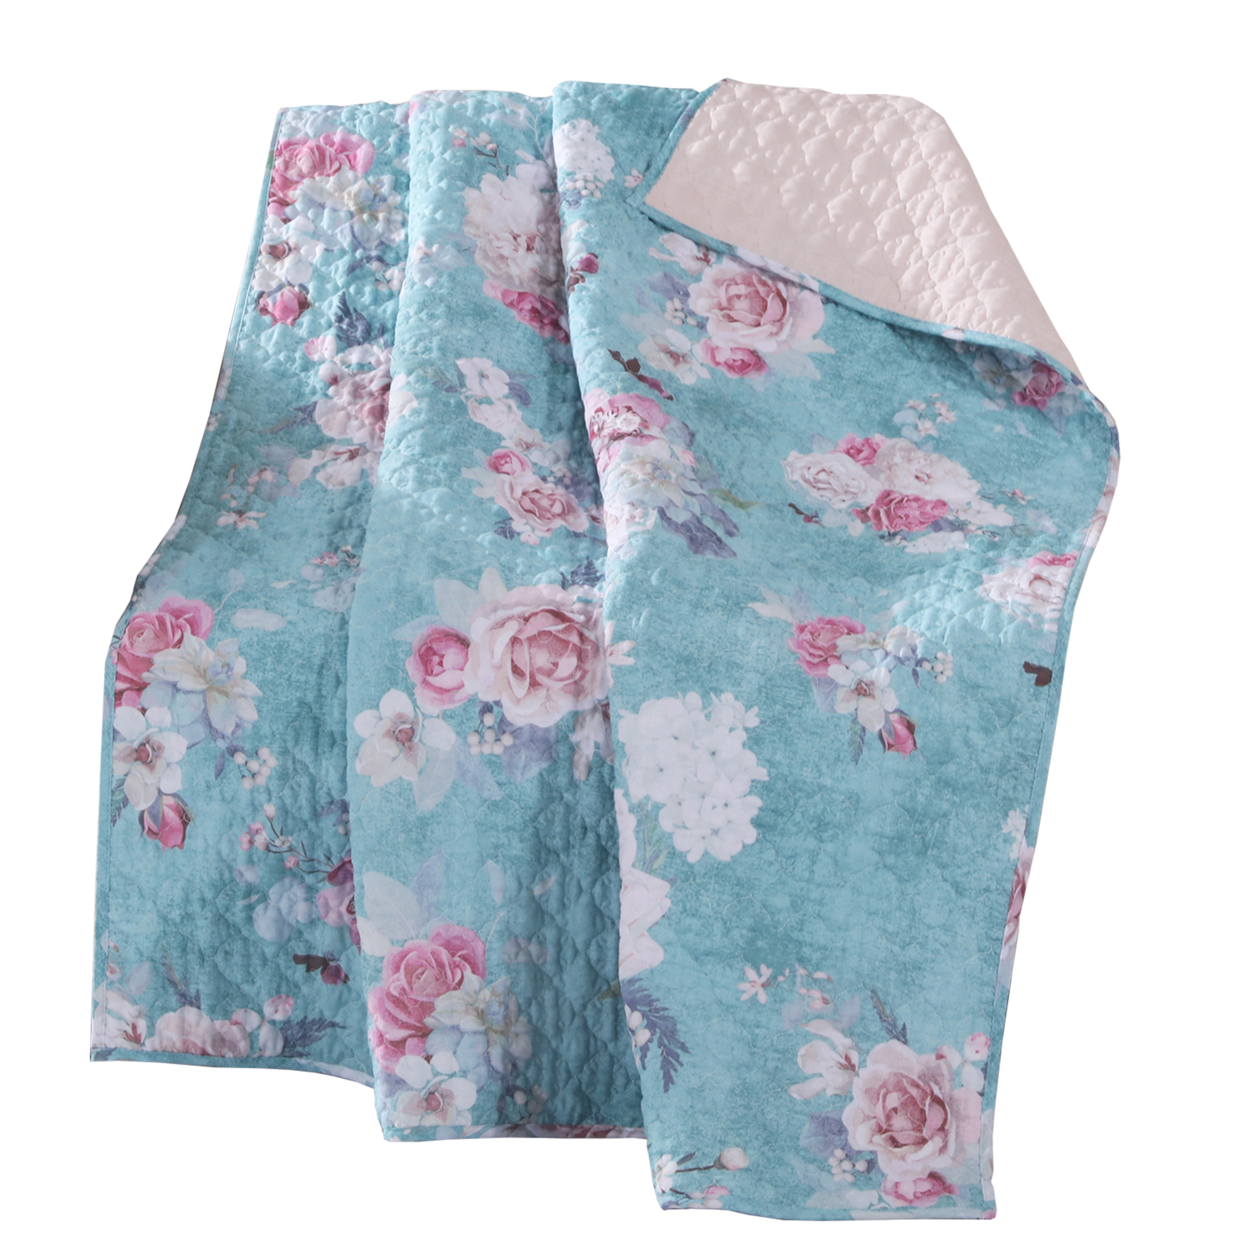 50 X 60 Inch Microfiber Throw Blanket, Floral Print, Blue, Pink, White- Saltoro Sherpi